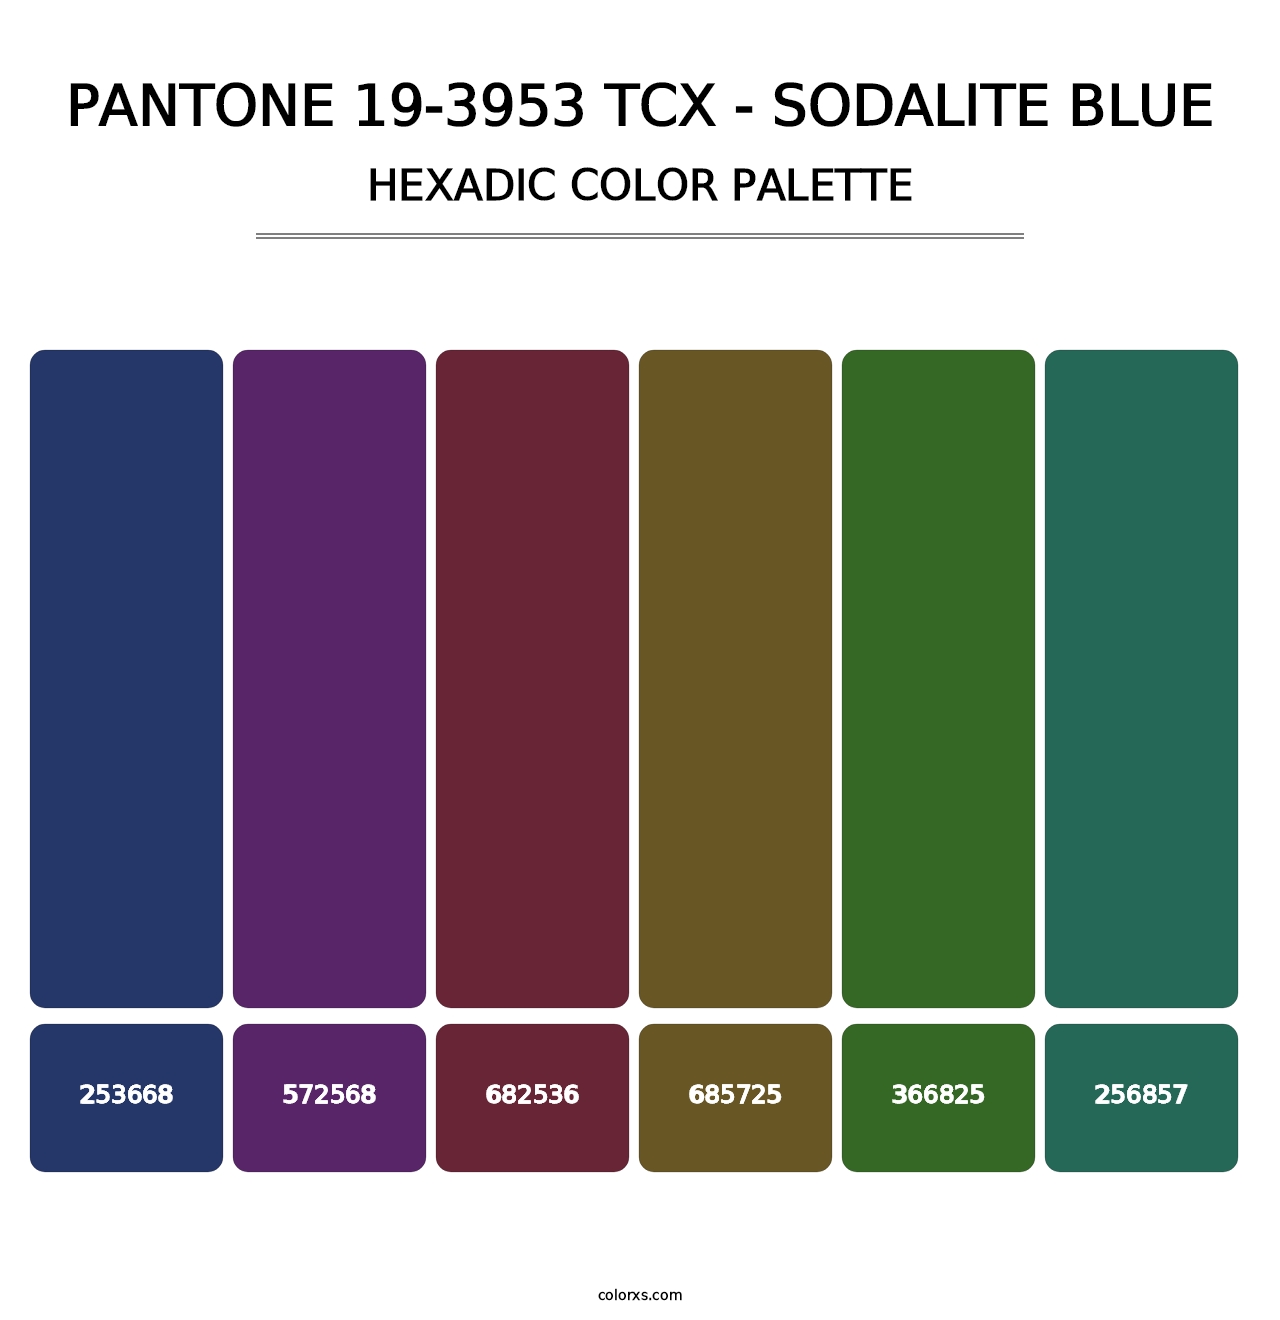 PANTONE 19-3953 TCX - Sodalite Blue - Hexadic Color Palette